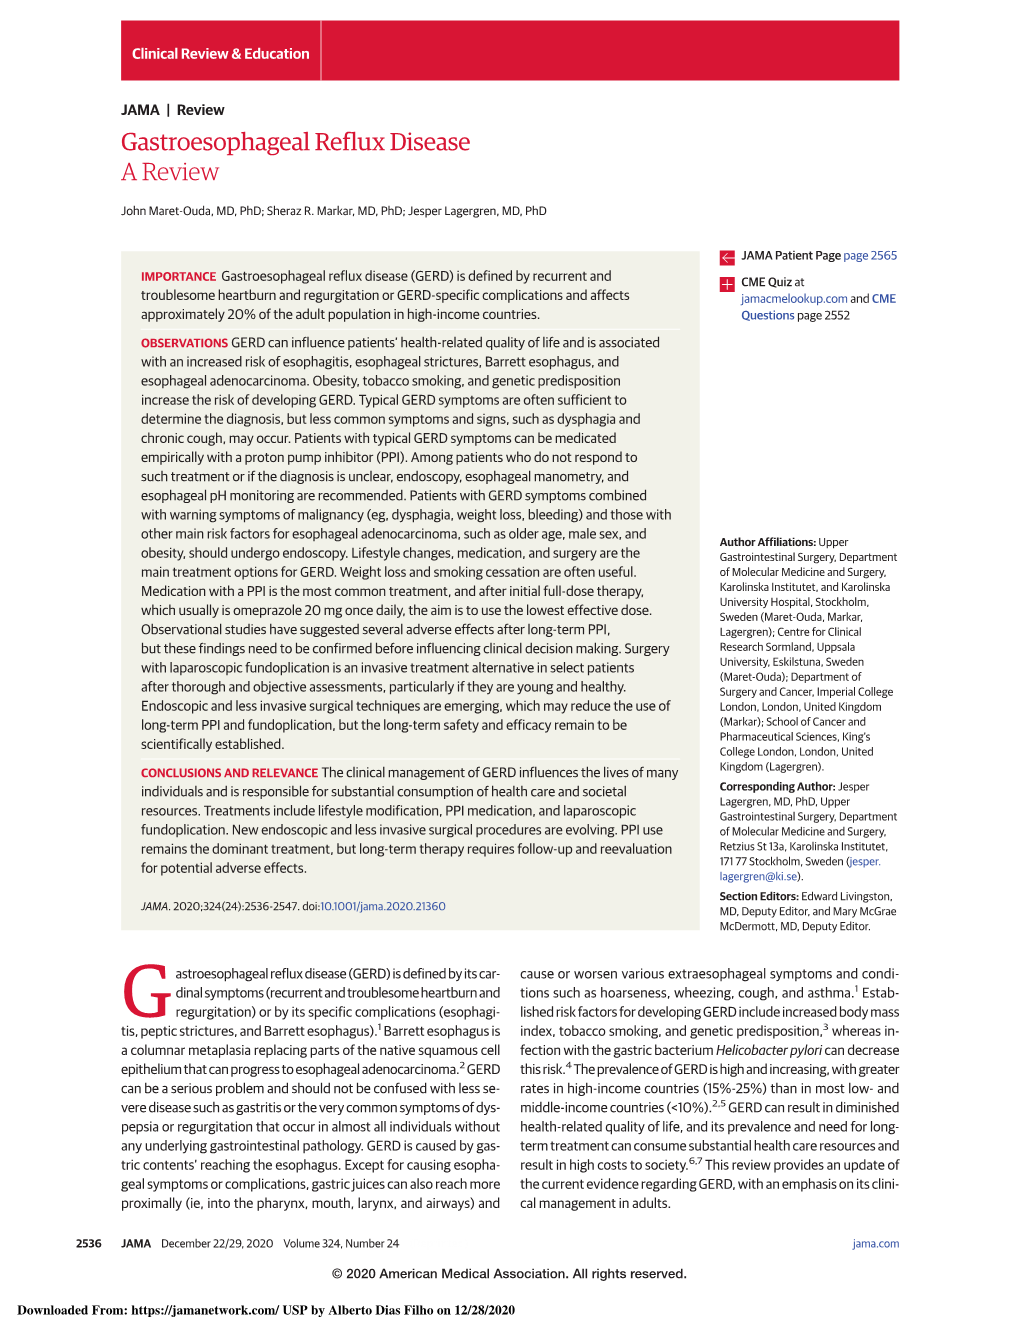 Gastroesophageal Reflux Disease: a Review